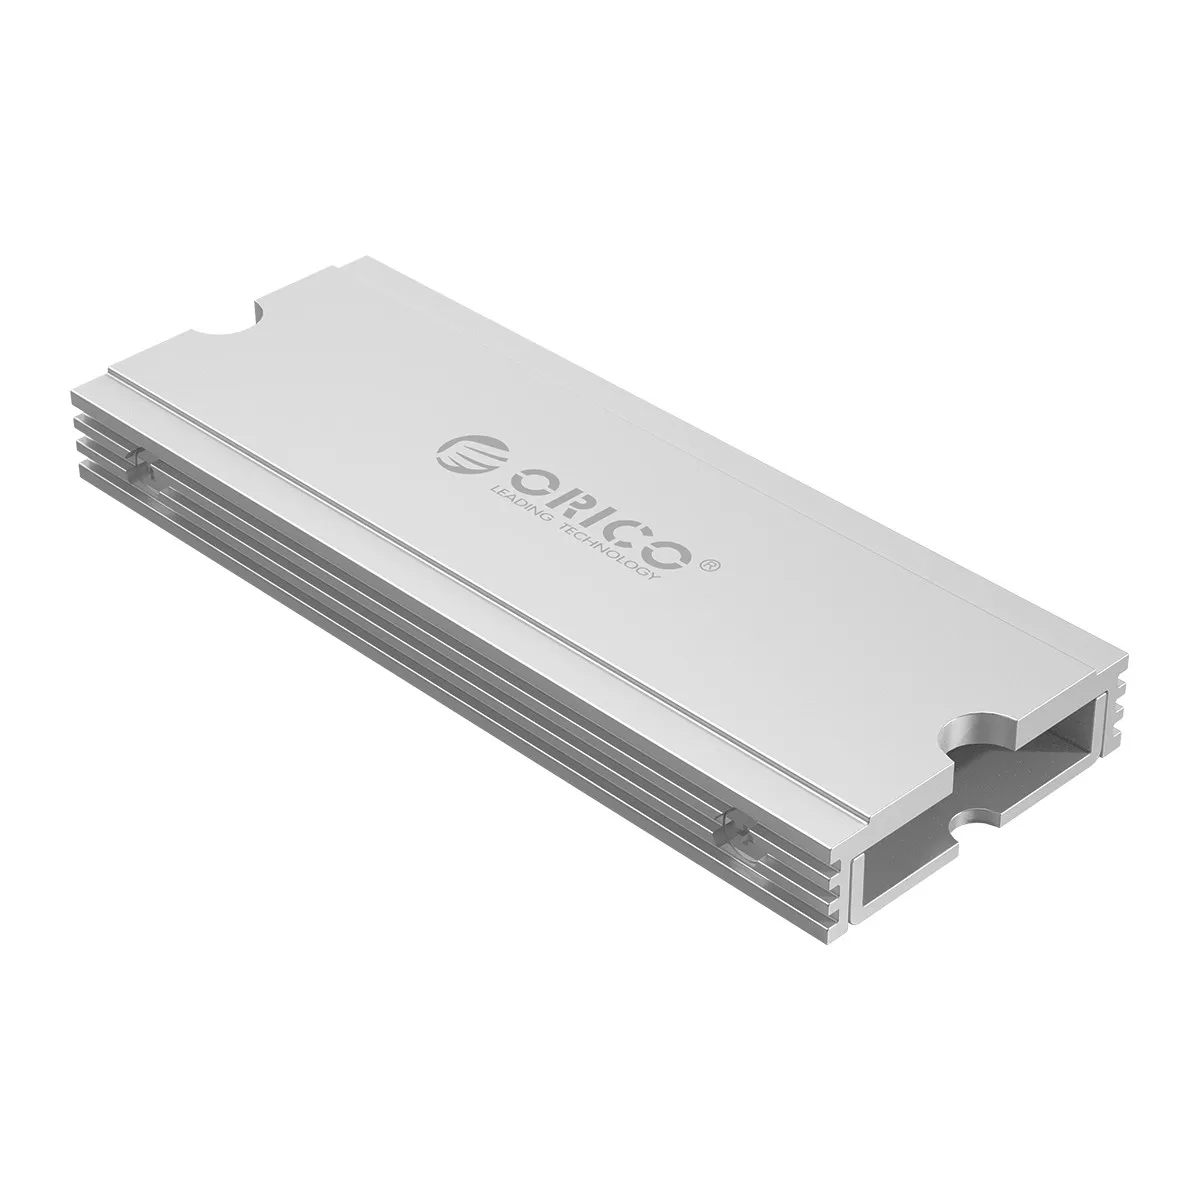 ORICO теплоотвод радиатор алюминиевый SSD Охлаждающий радиатор для M.2 NVME NGFF 2280 PCI-E радиатор SSD кулер